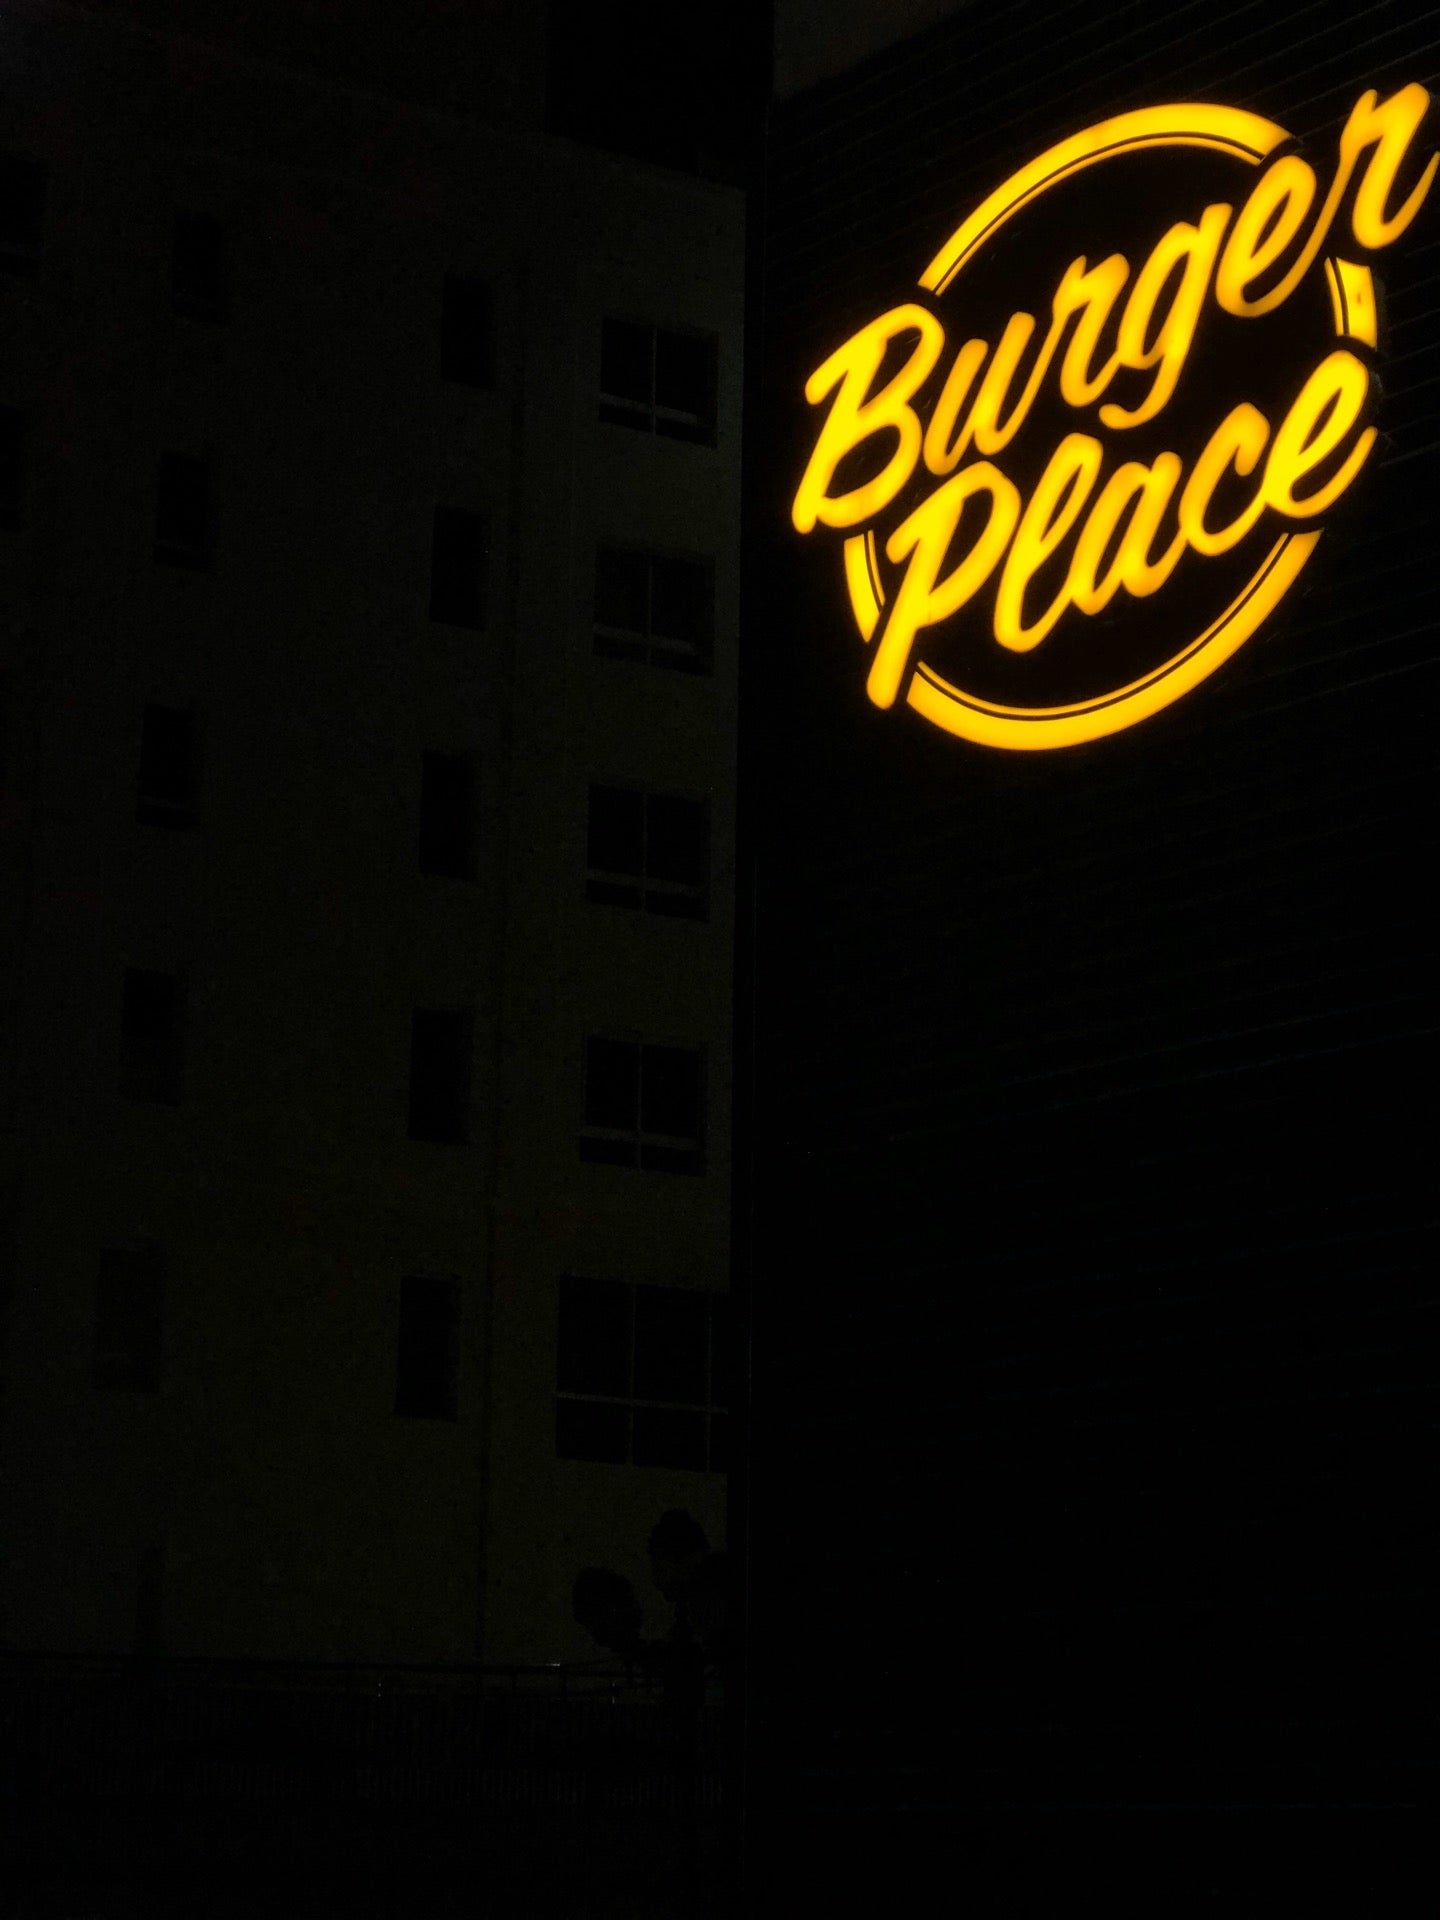 Burger Place